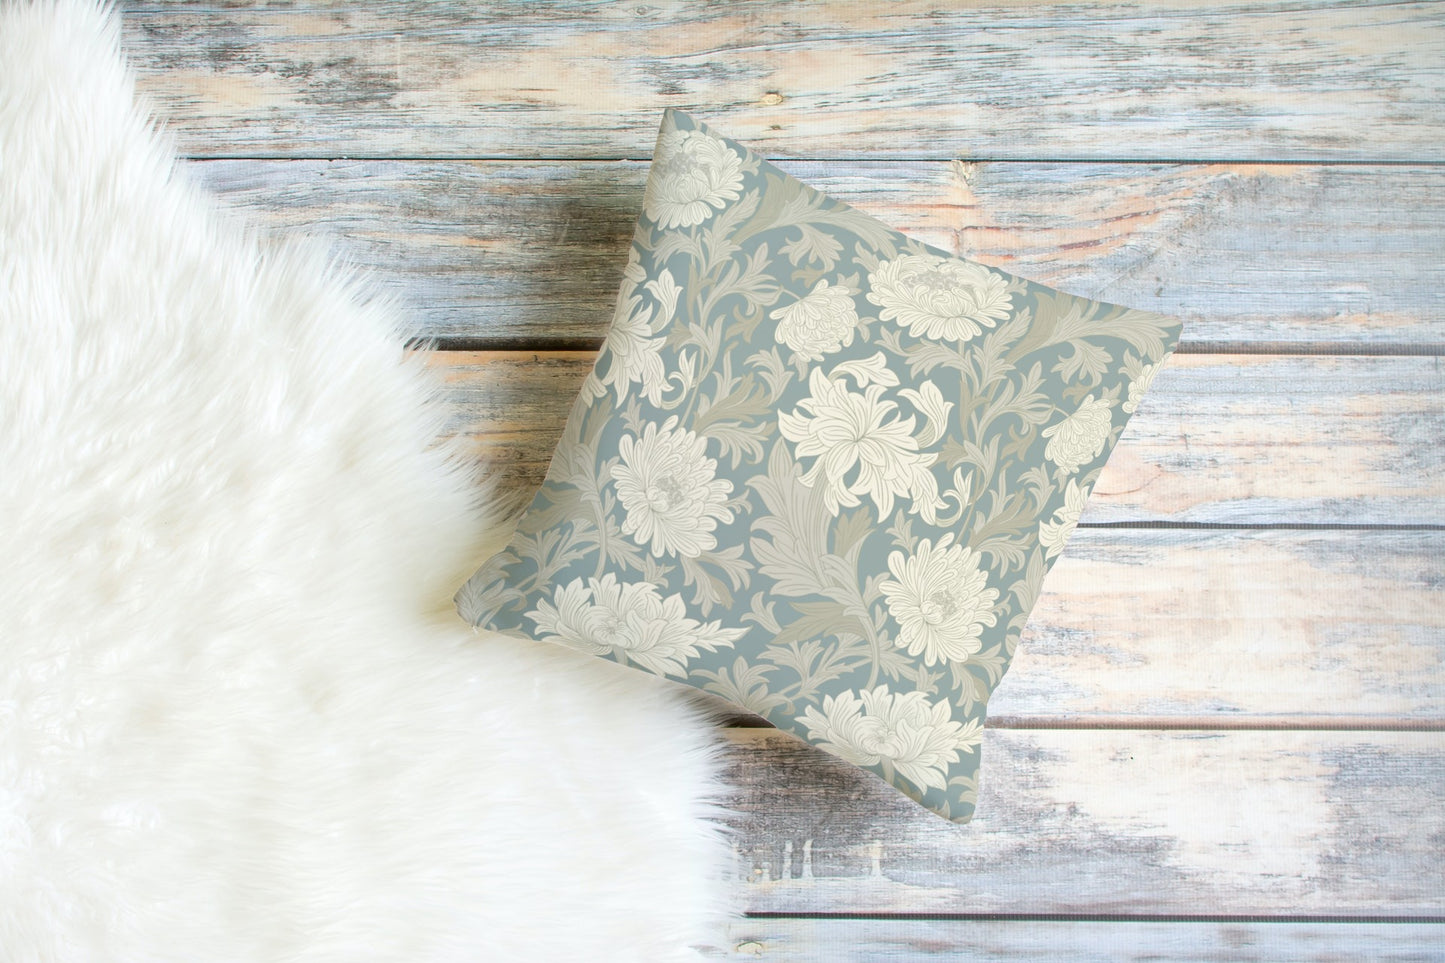 William Morris Cotton Pillows Misty Chrysanthemum